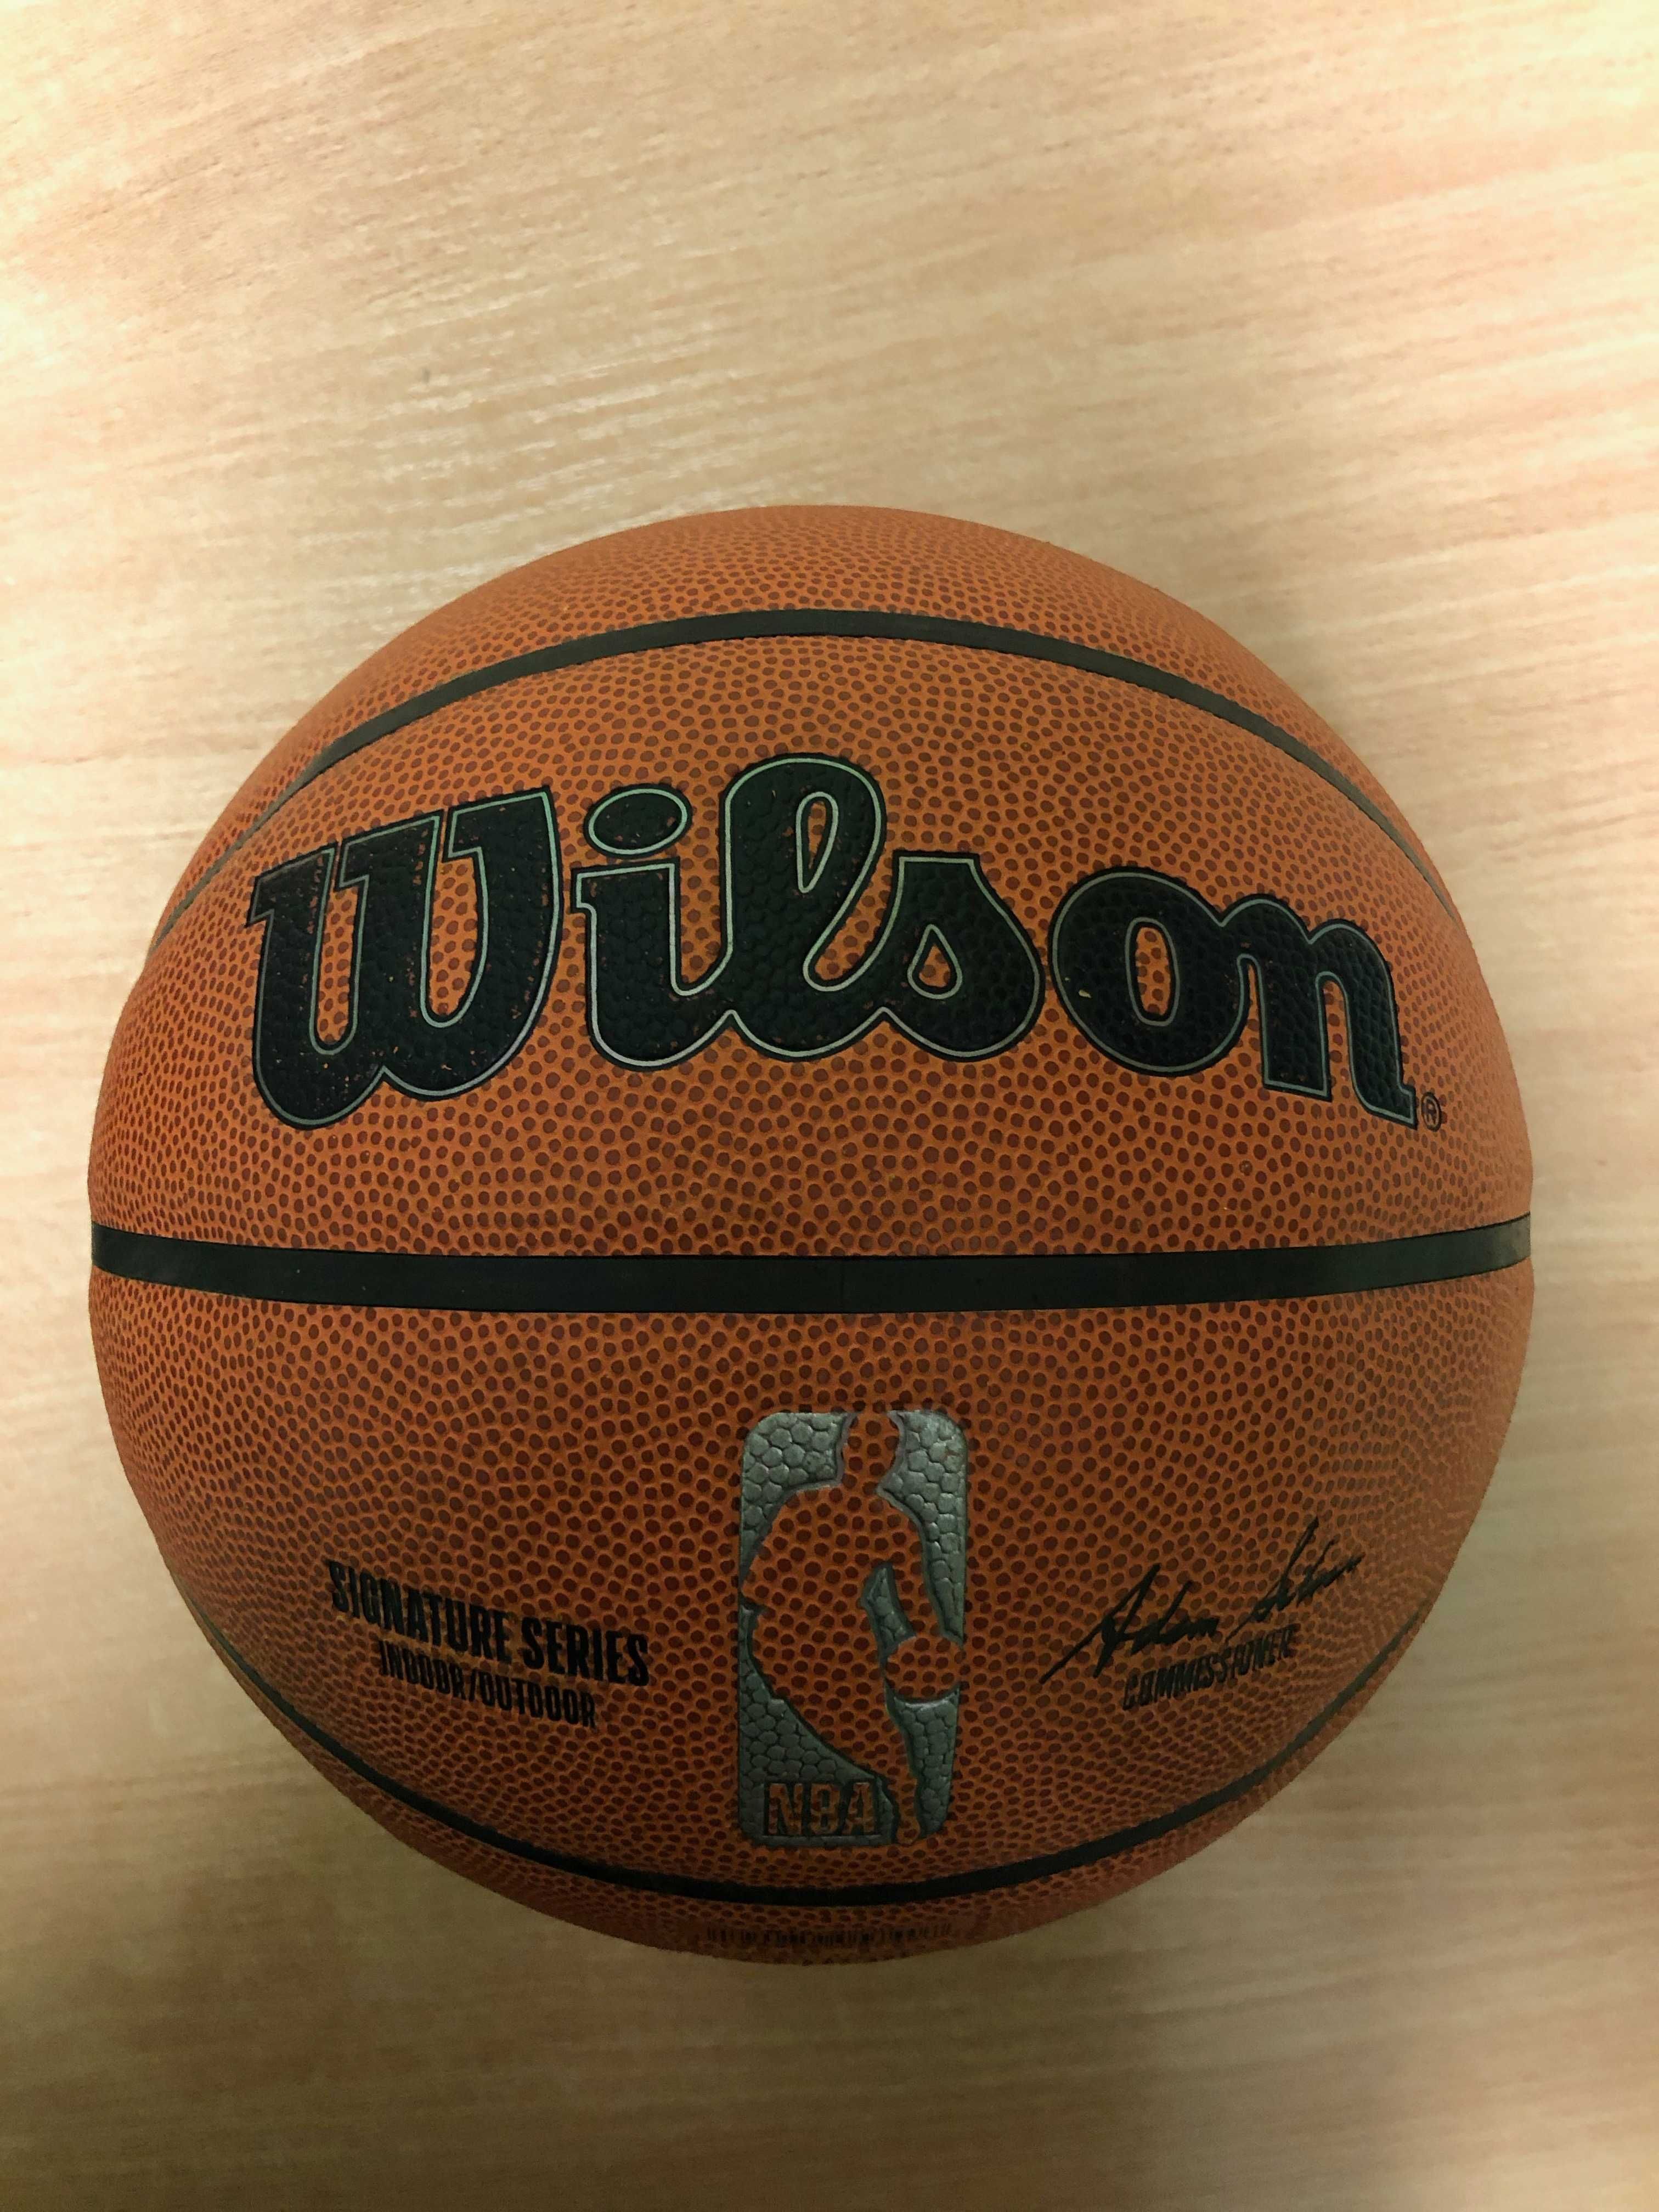 Piłka do koszykówki WILSON NBA Signature Series roz. 7